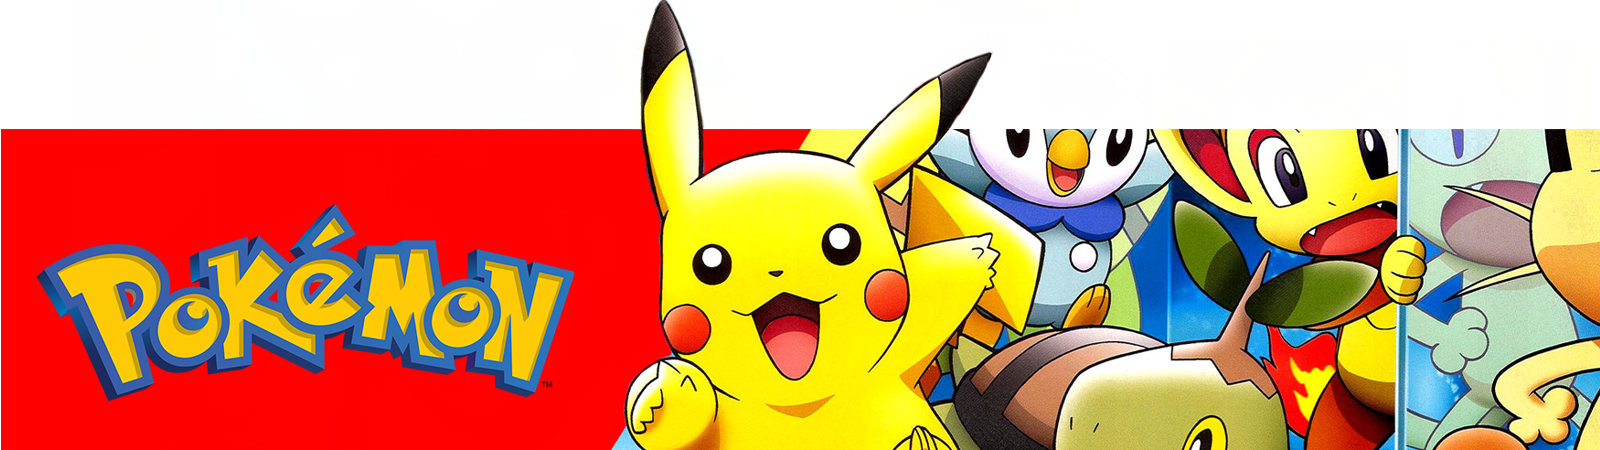 comprar Pokemon Online | Envios Gratis desde 59€